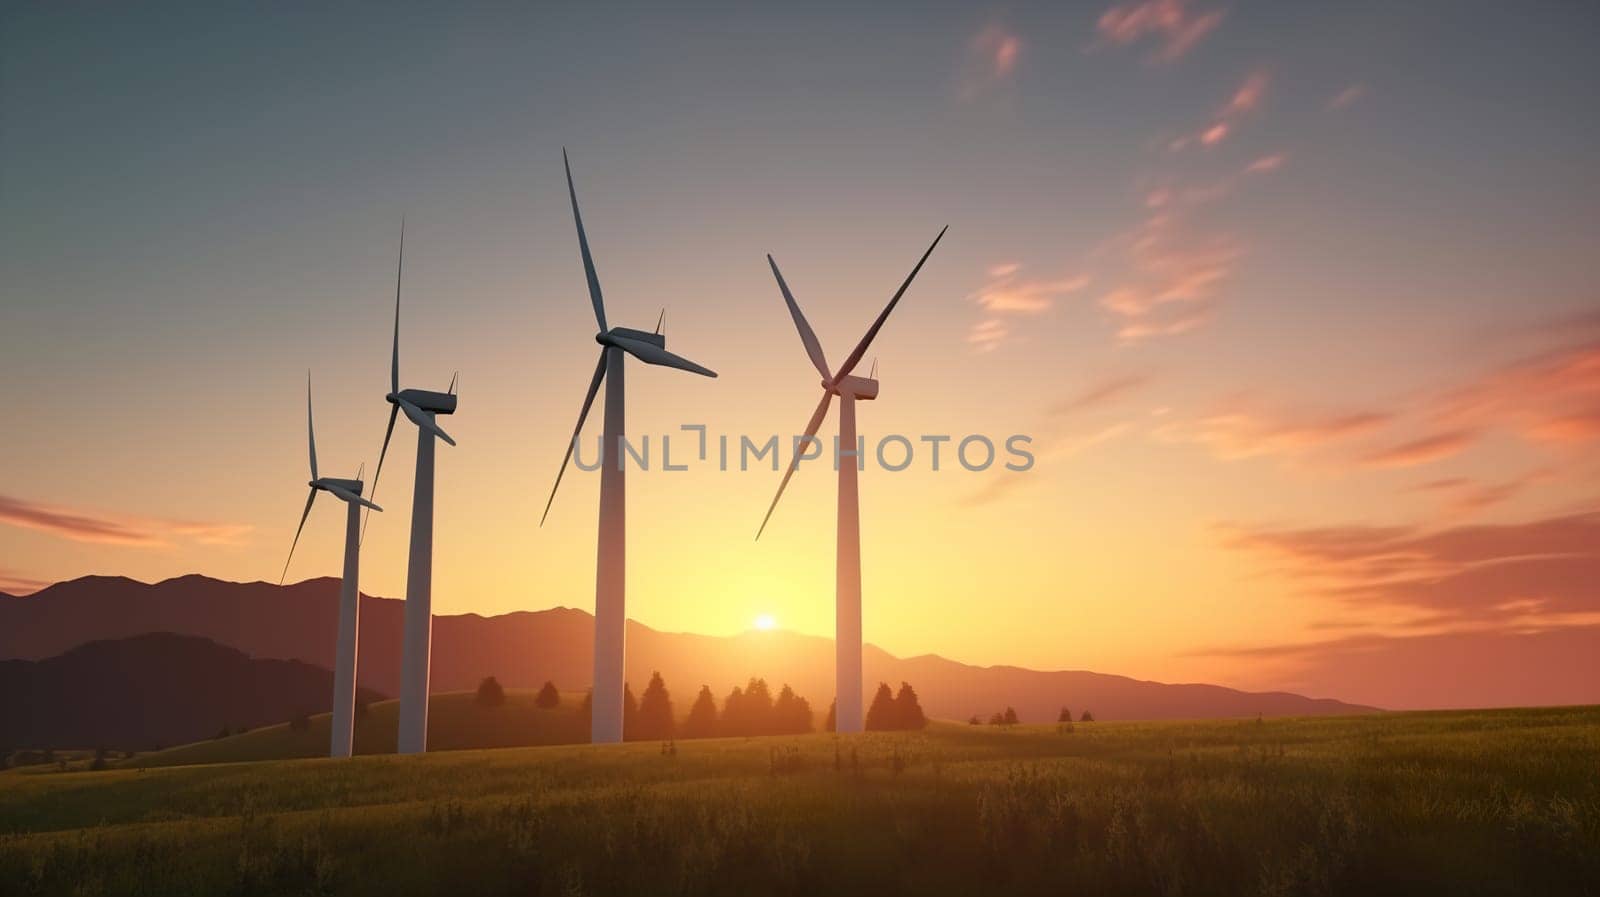 wind turbines in the rising sun by Jyliana